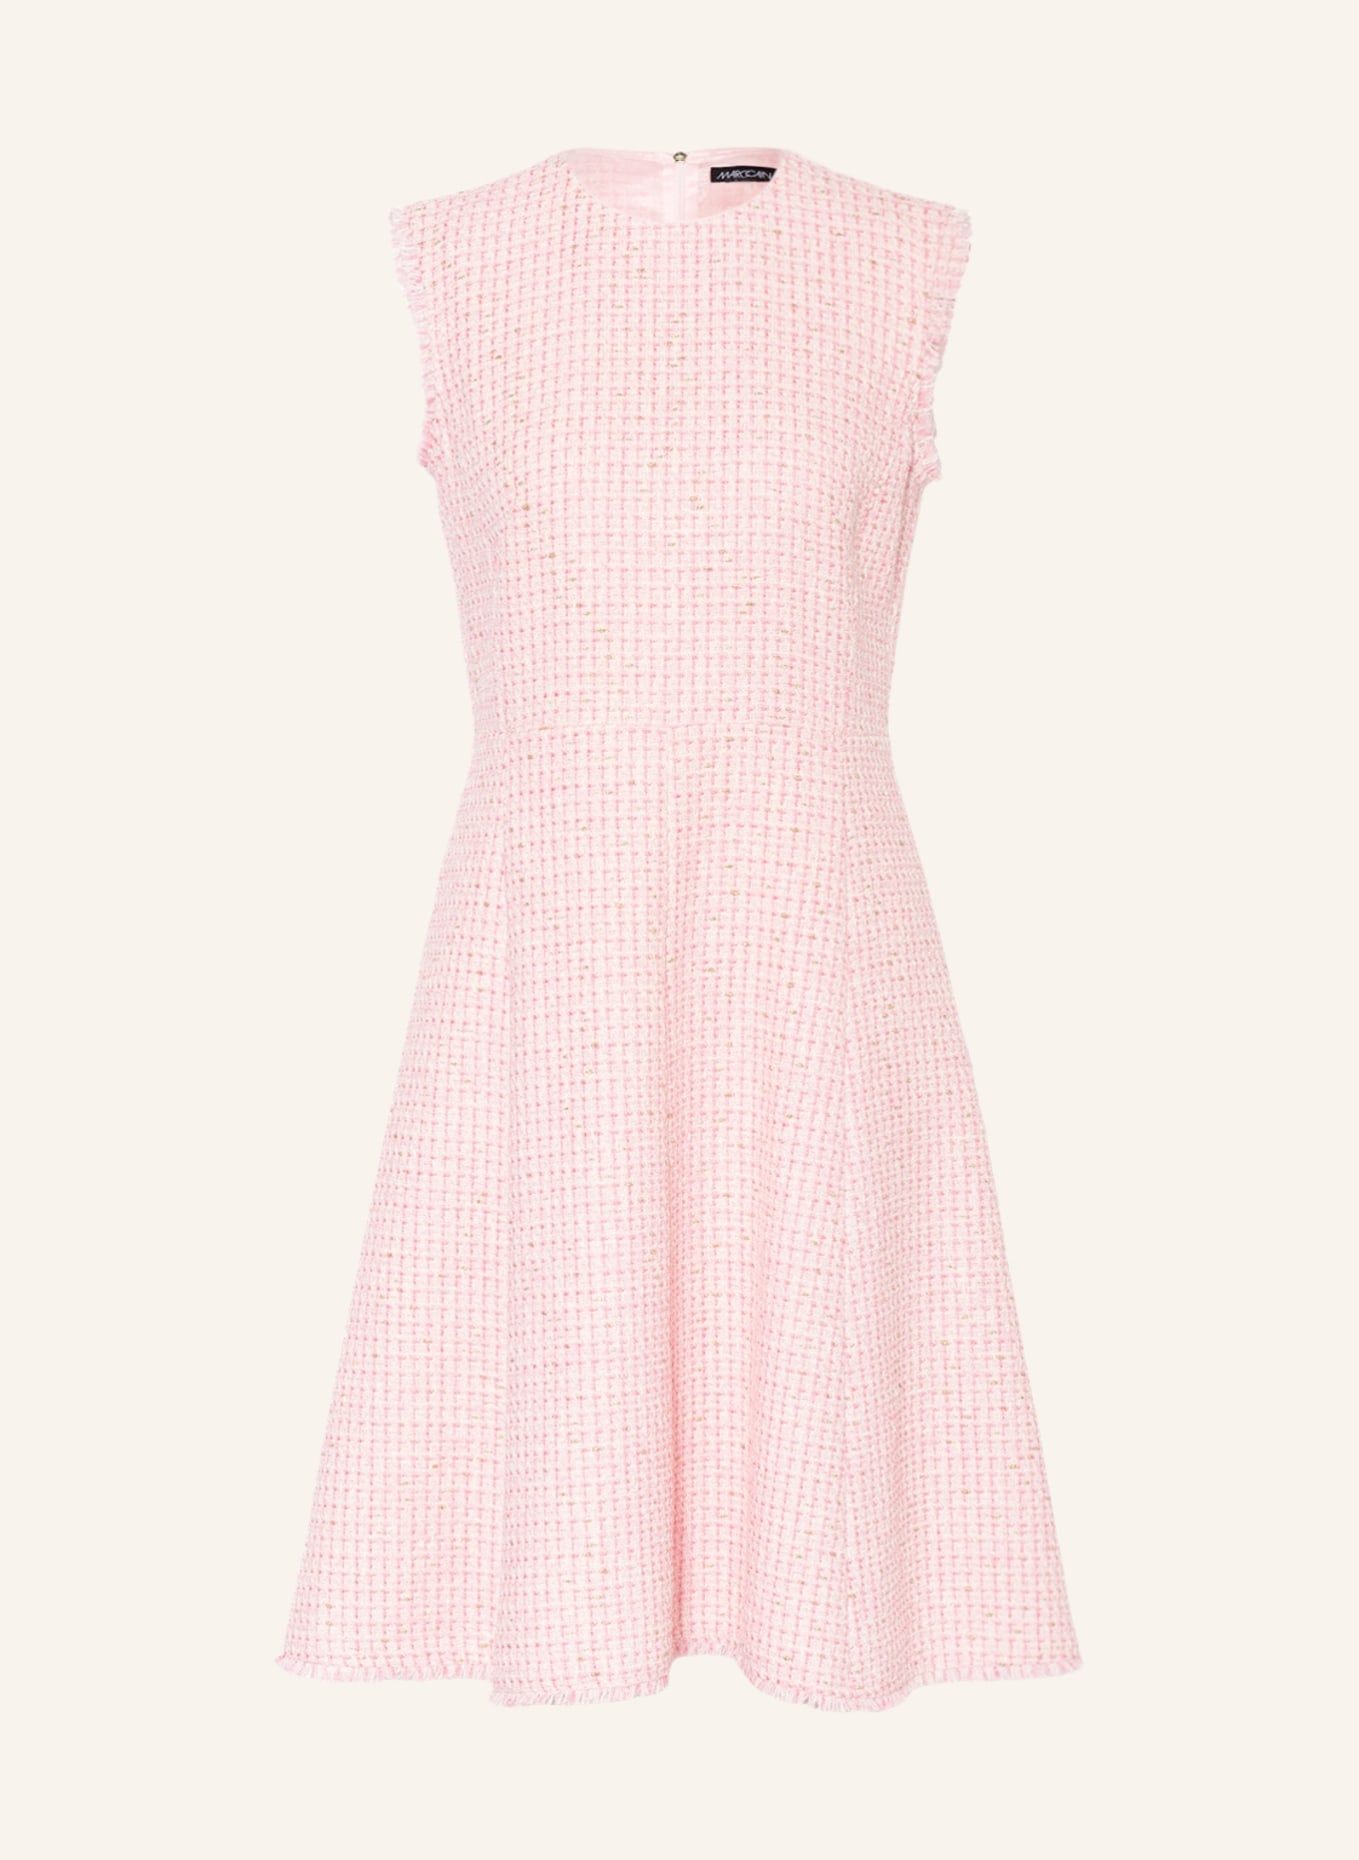 MARC CAIN Tweed-Kleid, Farbe: 211 soft pink (Bild 1)